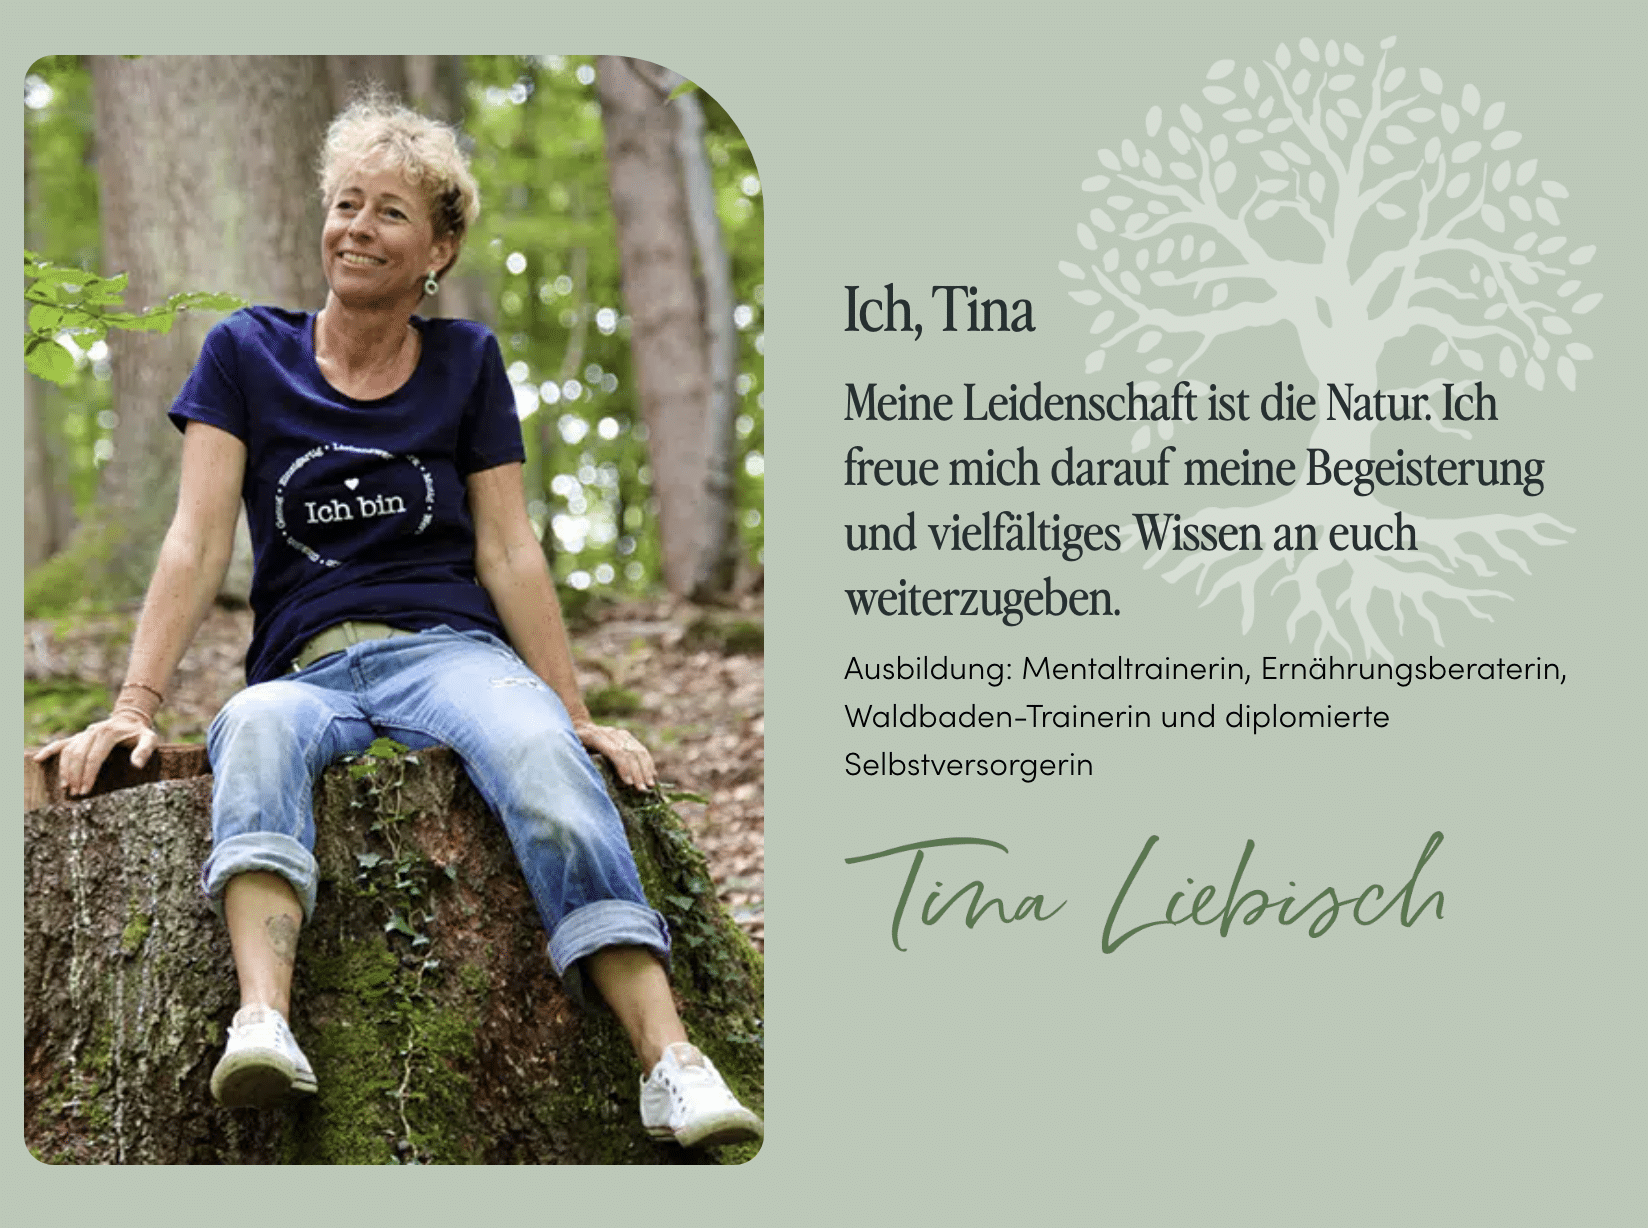 Zitat "Ich, Tina", Website Tina Liebisch